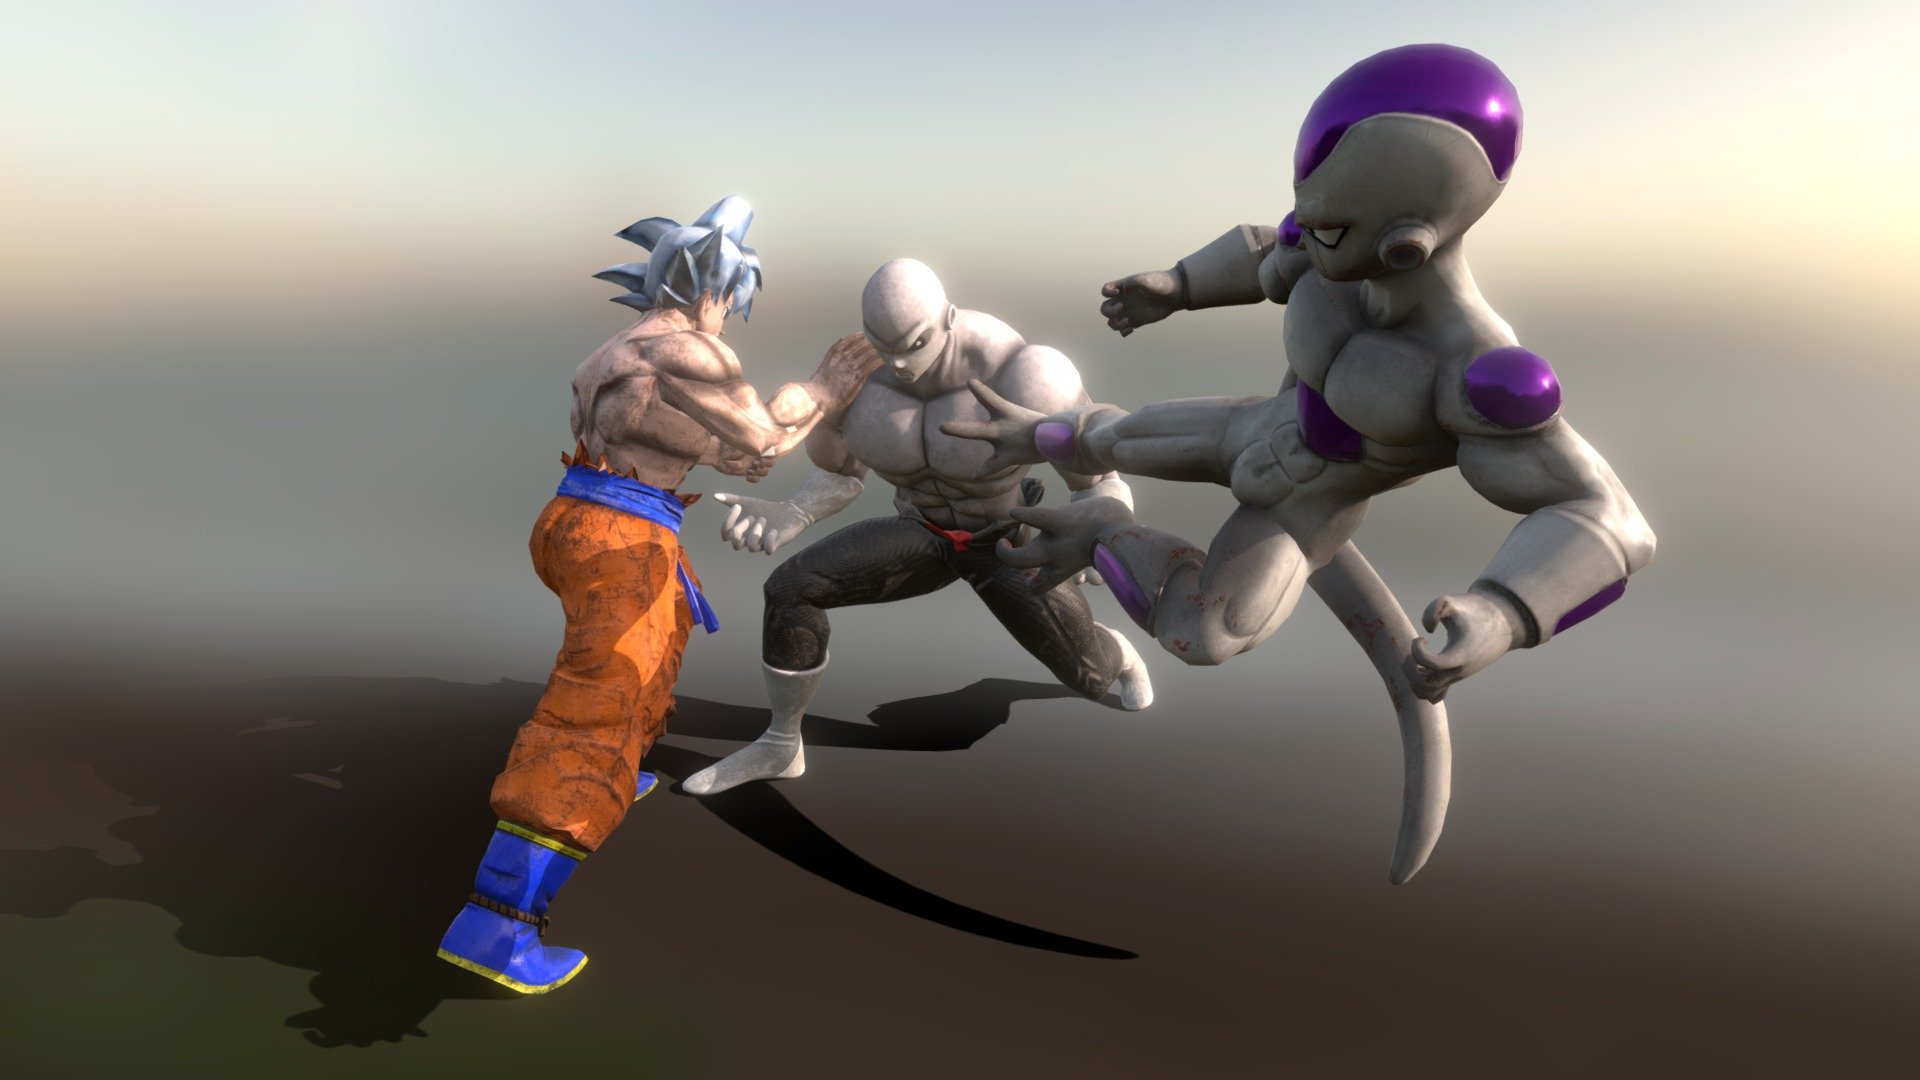 Escena final de Goku jiren y Freezer (Práctica) - Goku vs Jiren vs Freezer - 3D model by Krlts 3d model